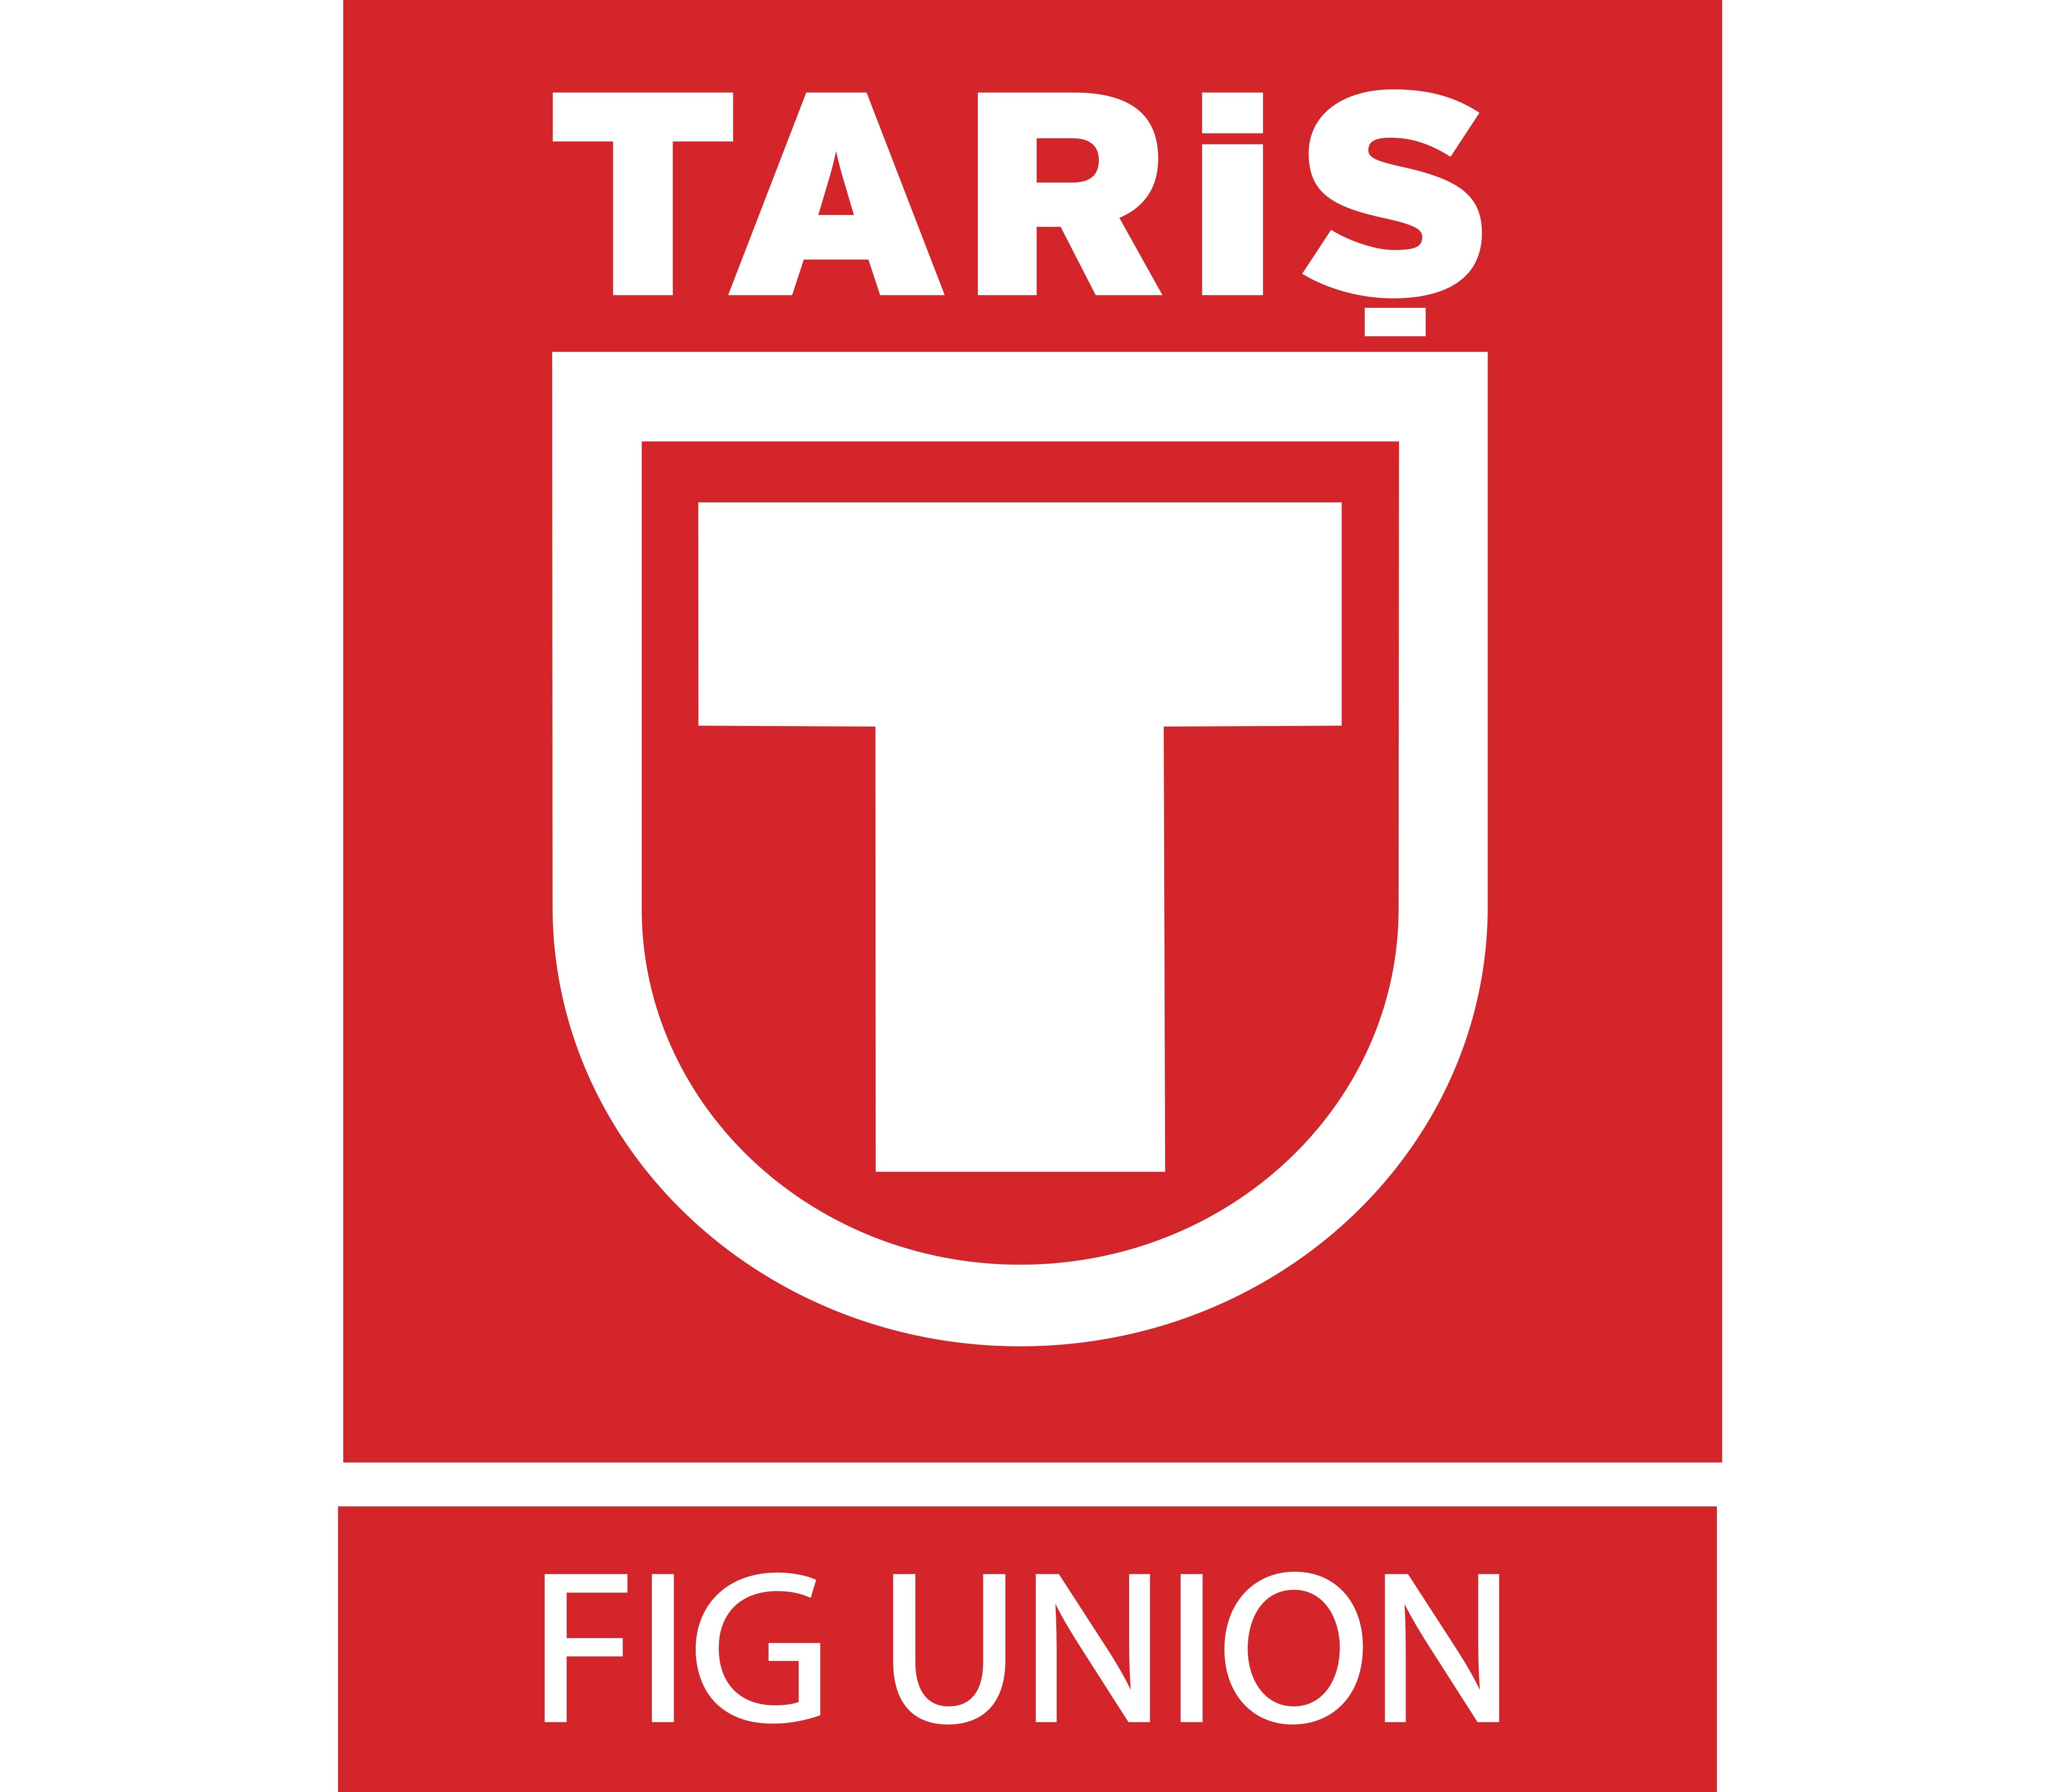 SS Taris Incir Tskb (Taris Fig Union)